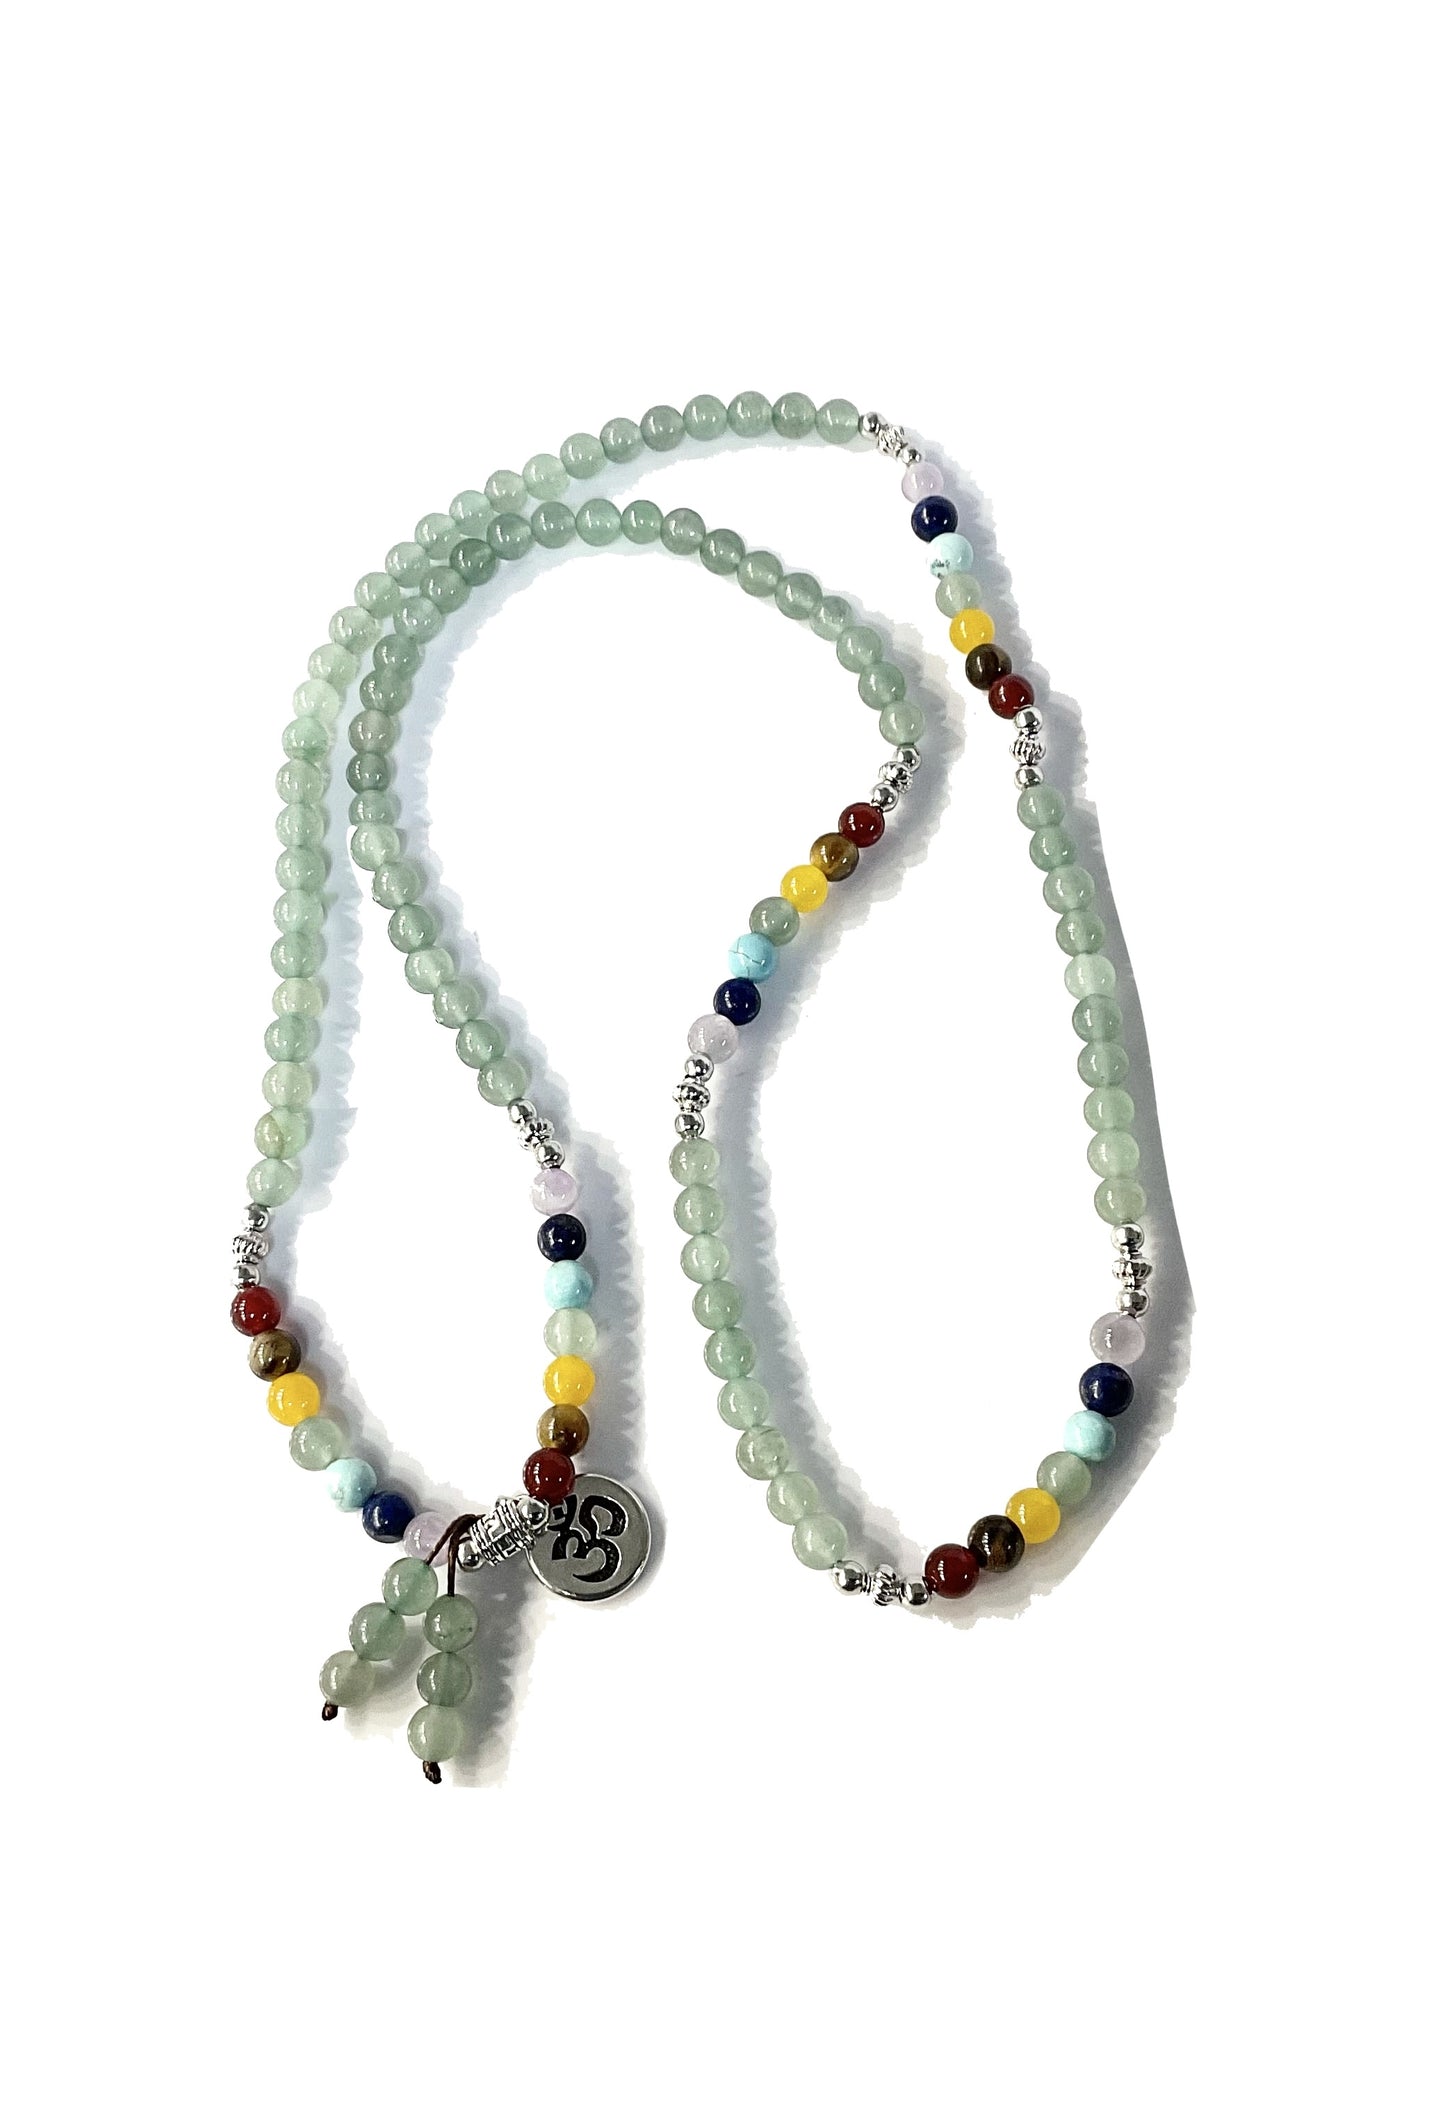 Mala Beads Natural Stone Necklace #89-72218